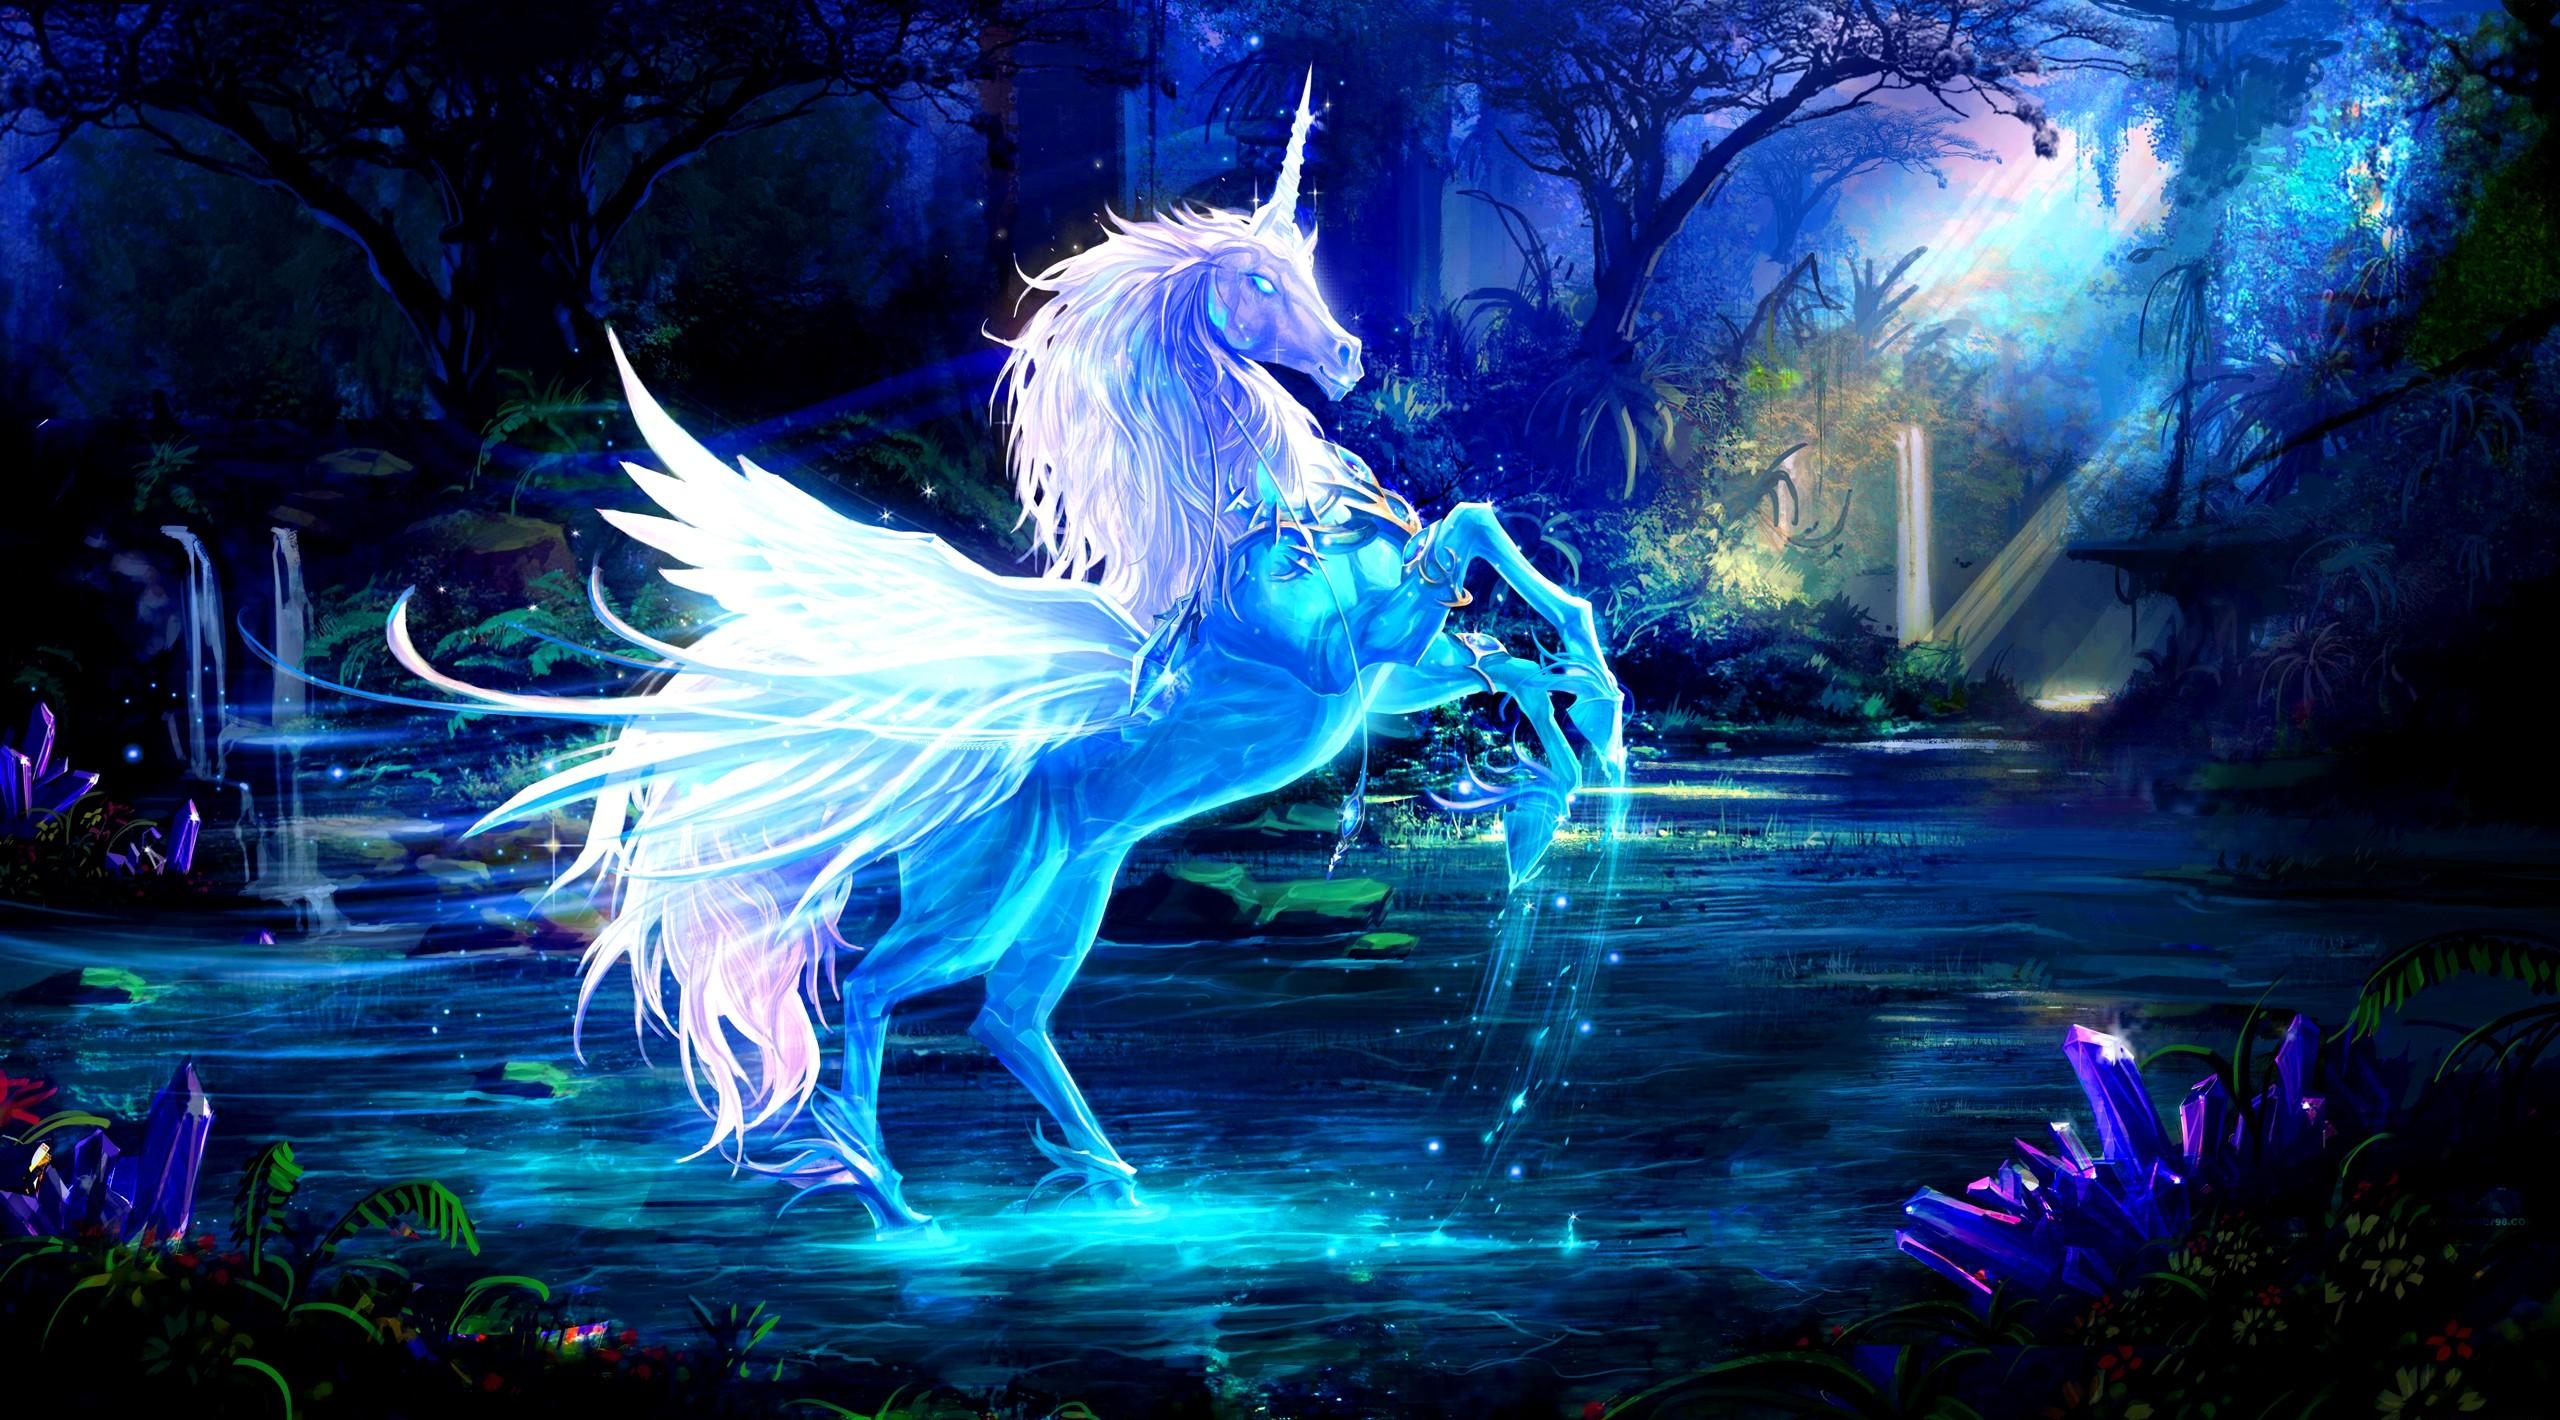 magic, water, fantasy, night, forest, unicorn